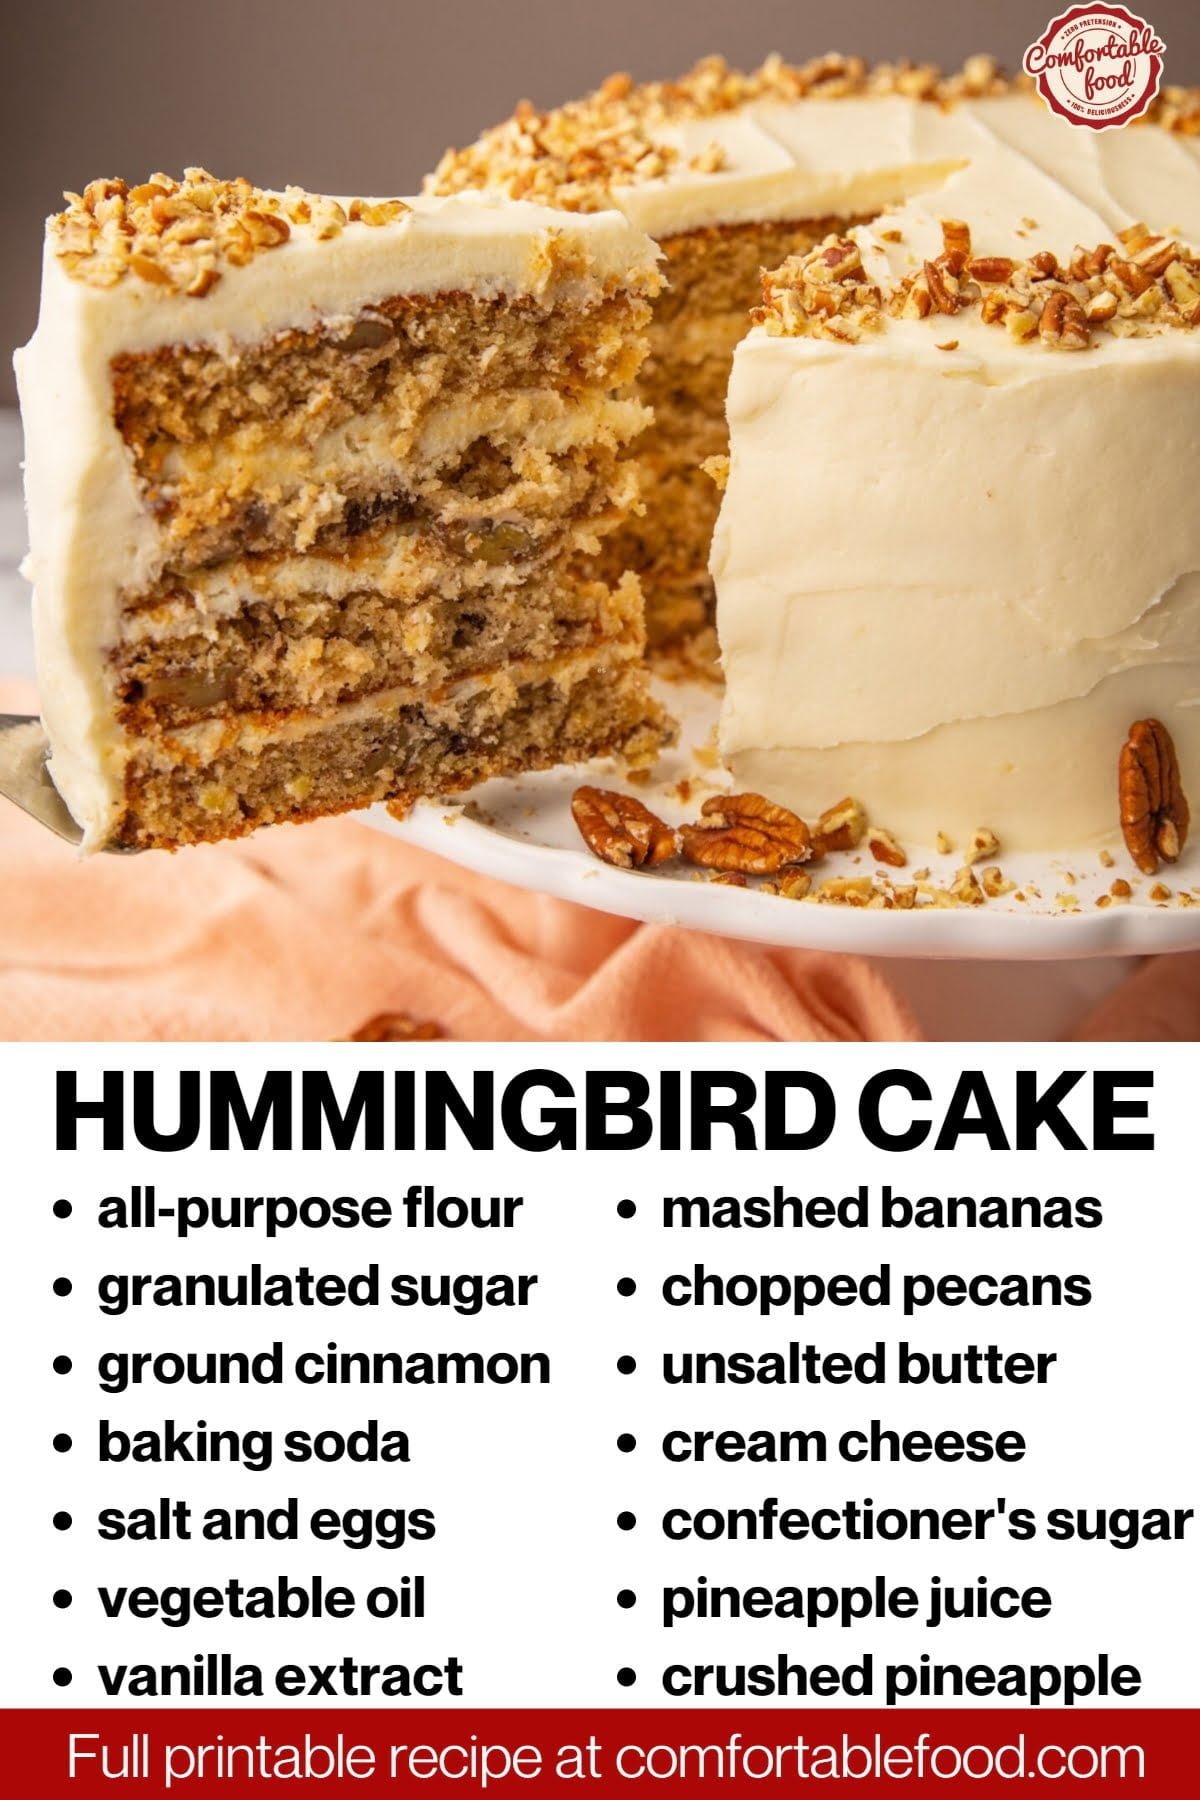 Hummingbird cake - socials 2